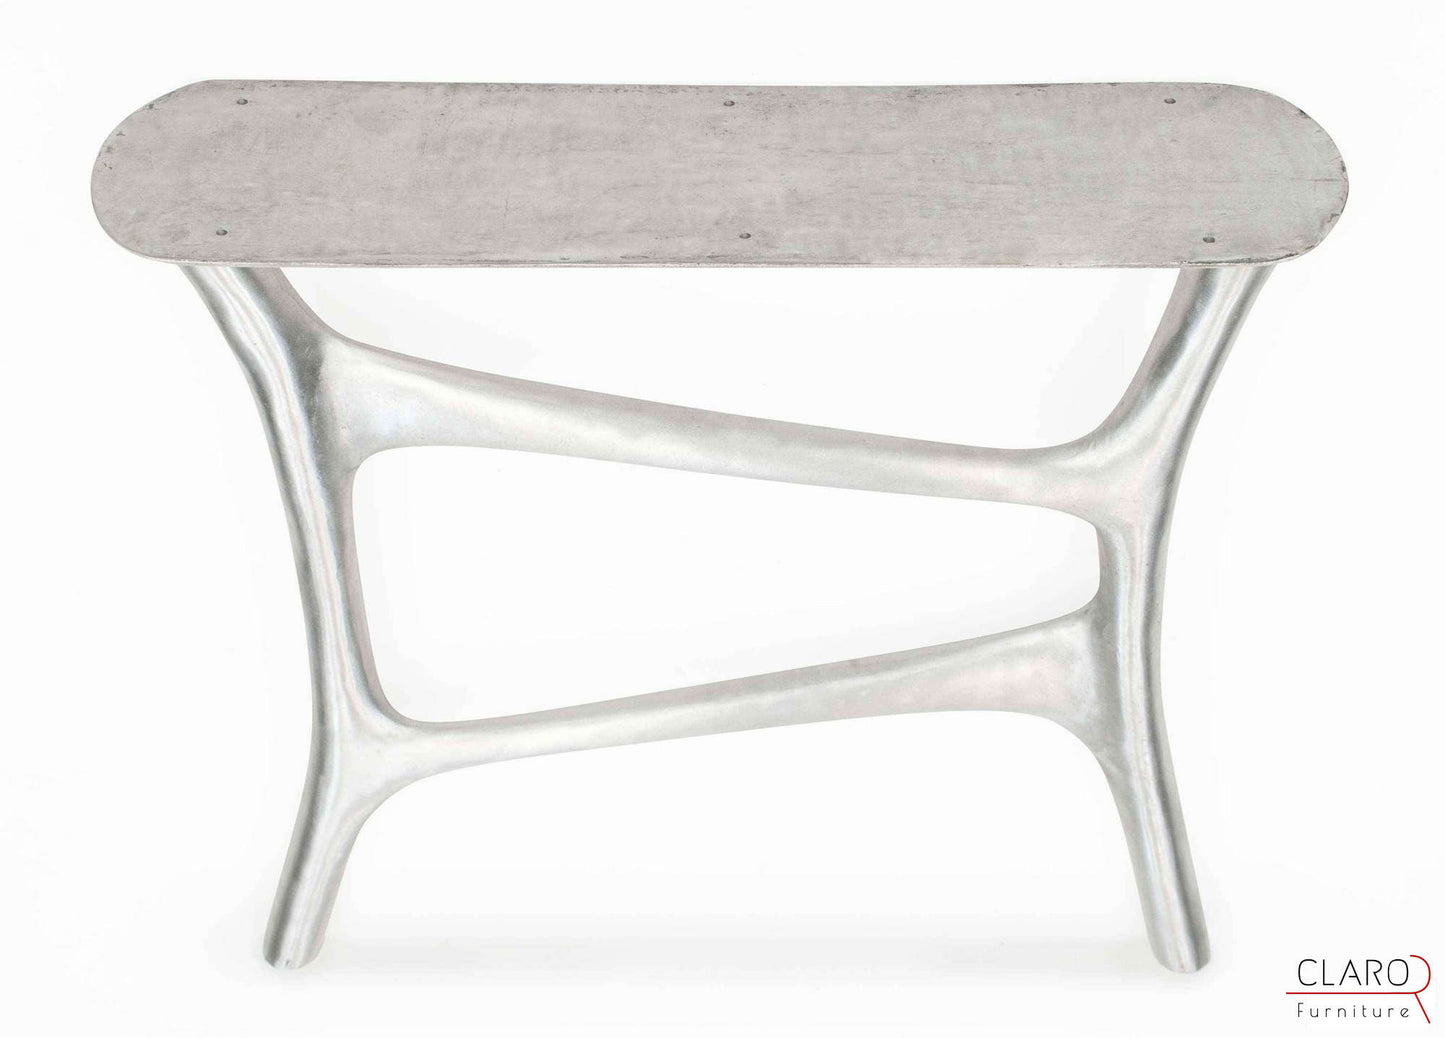 Aluminium Sand Cast Table Leg (set of 2)